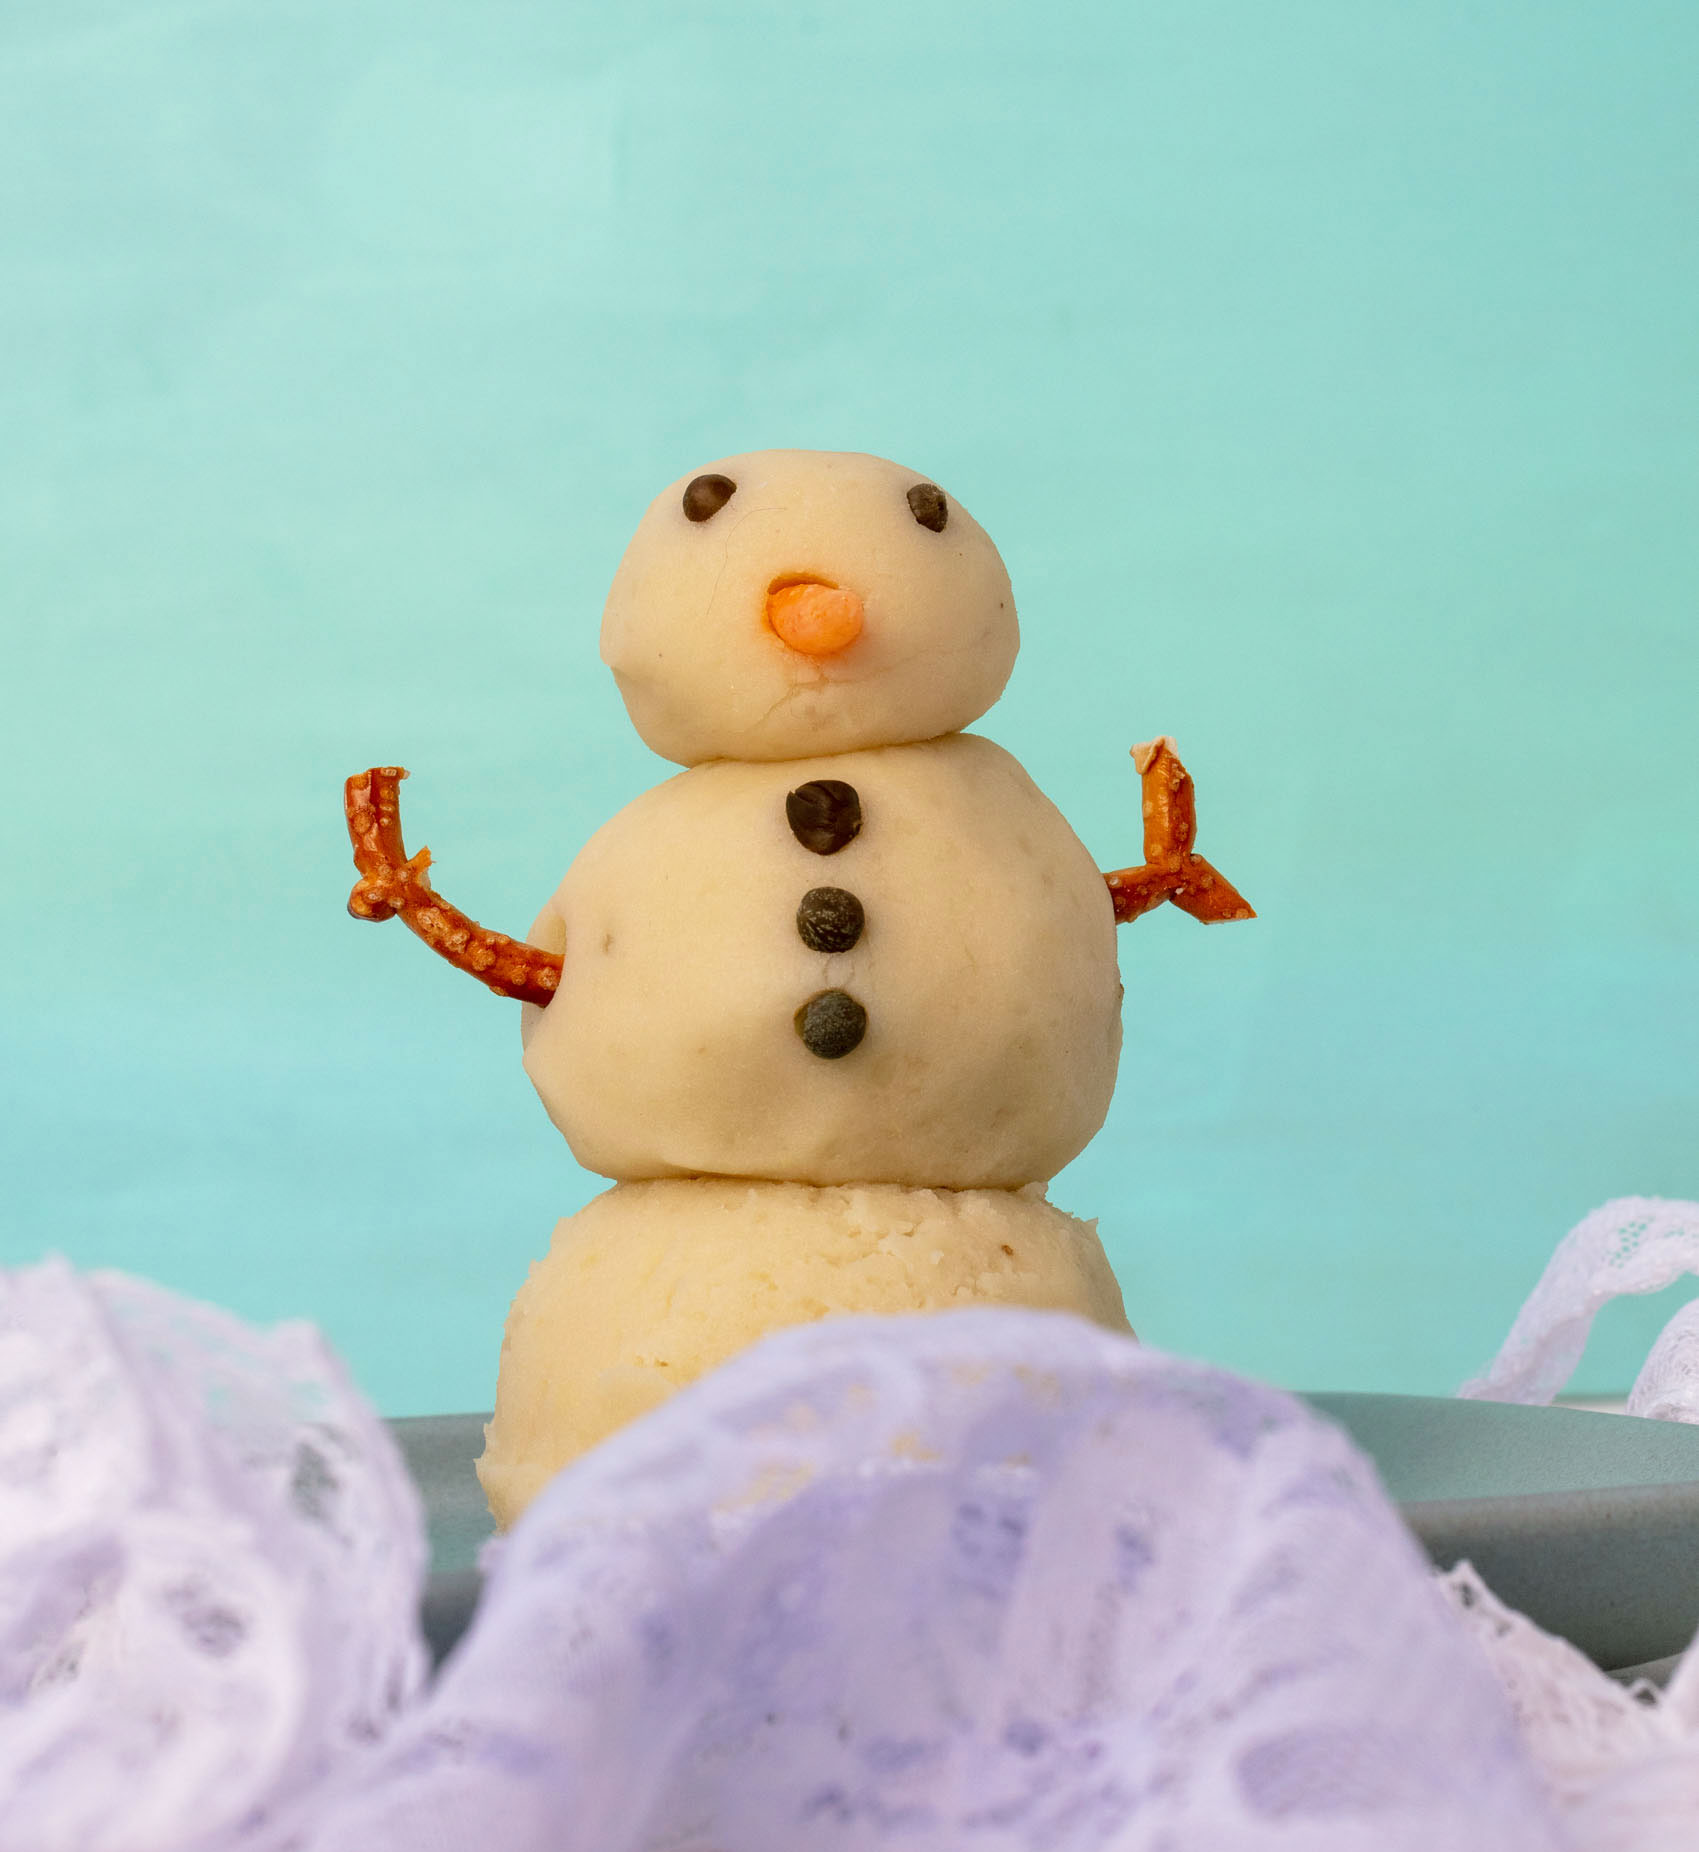 Snowman/snowwoman made of mashed potatoes